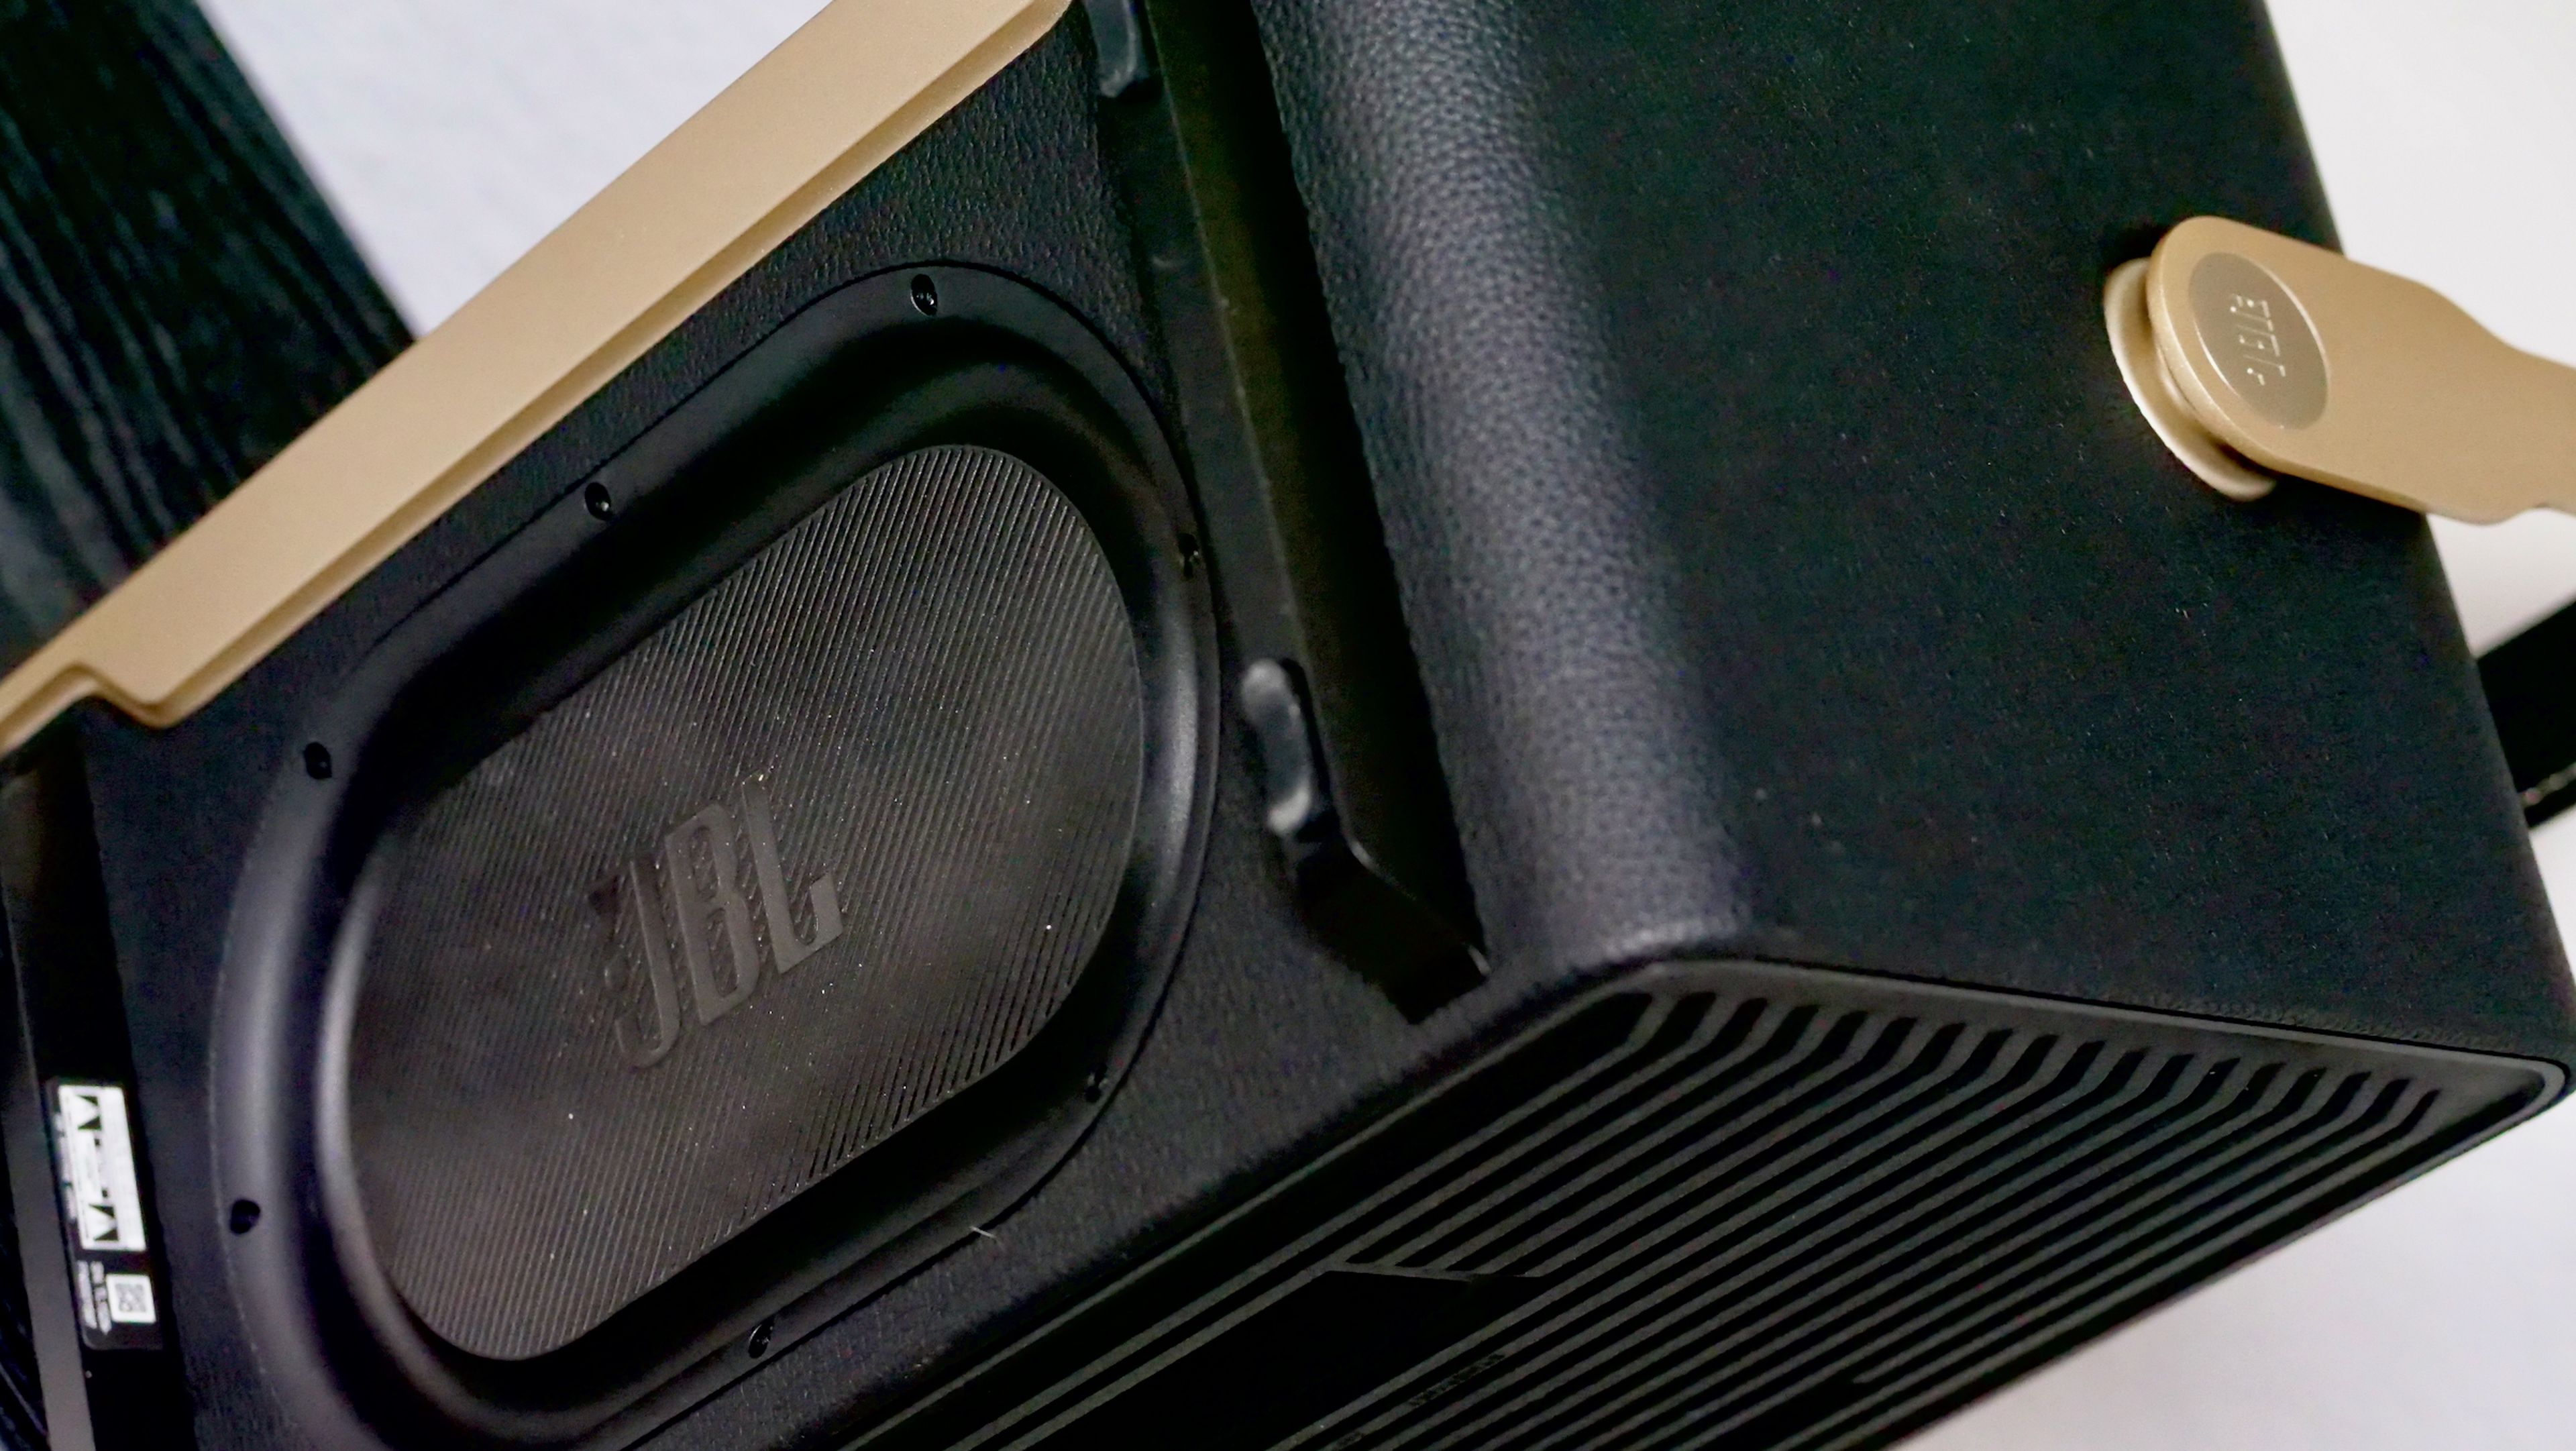 JBL Authentics 300 review, un dispositivo increíble que merece mucho la pena